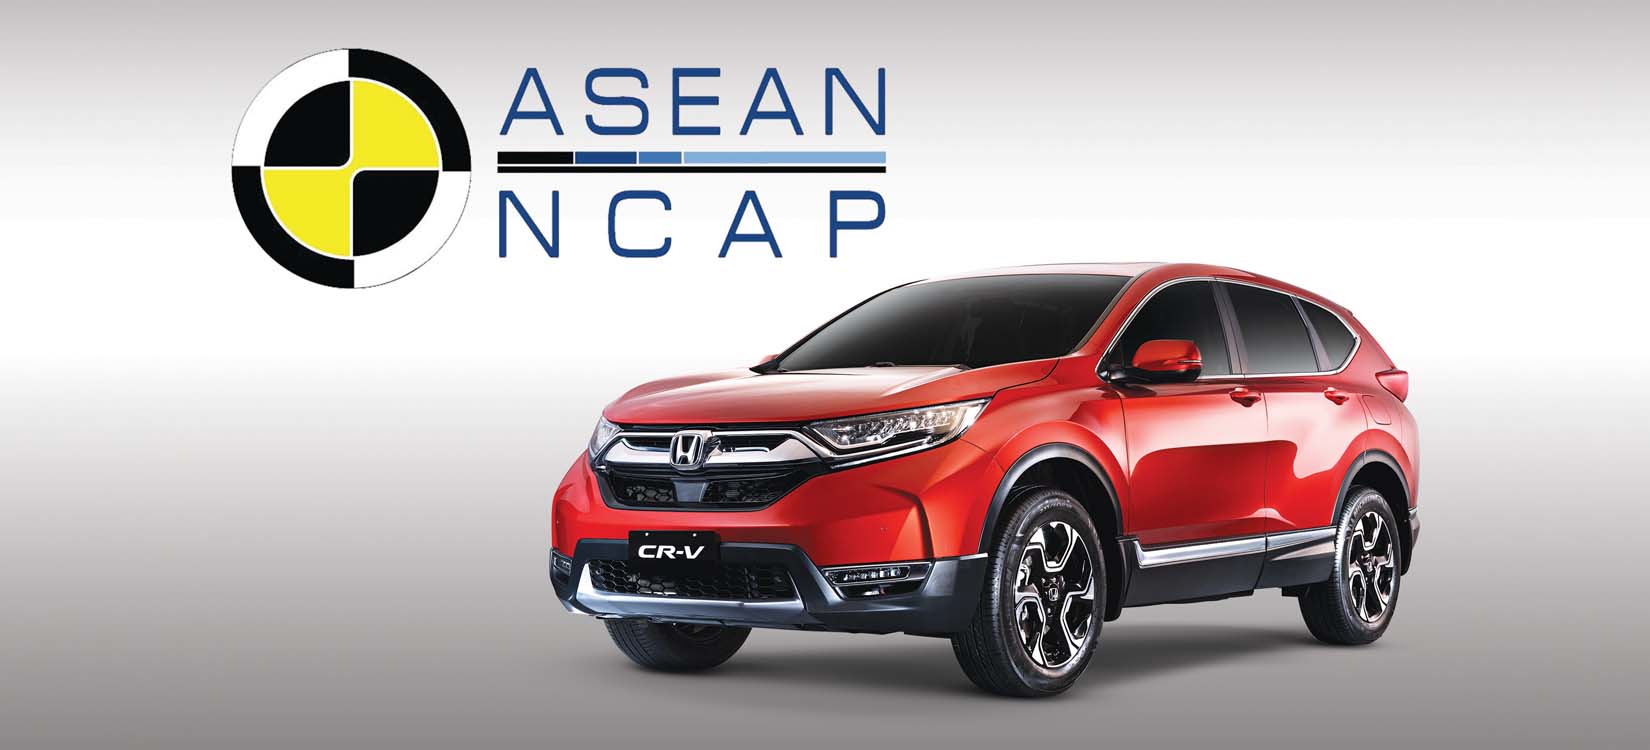 Honda CR-V Wins Two Major Awards at ASEAN NCAP Grand Prix Awards 2018